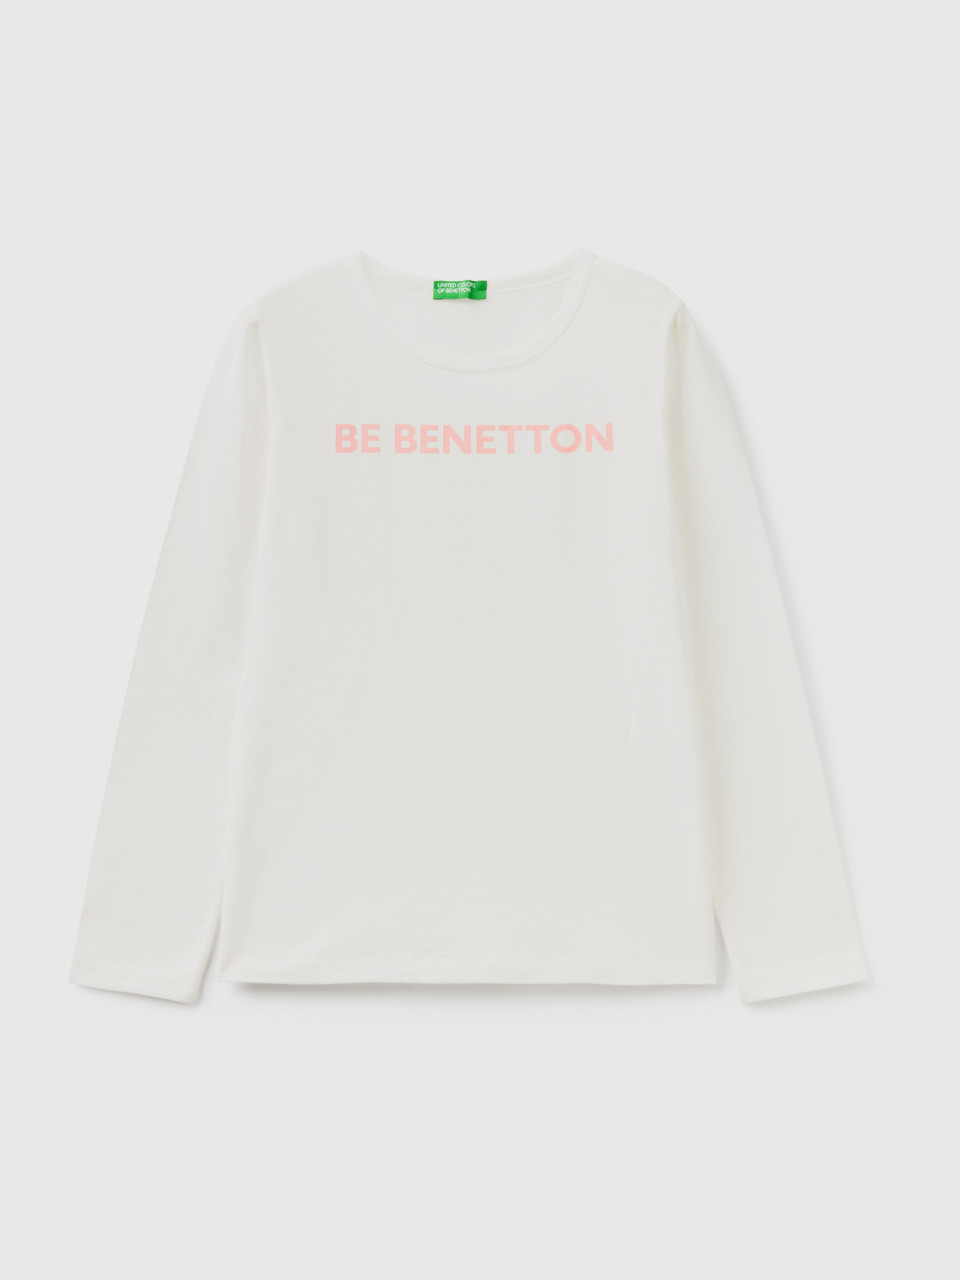 Benetton, Long Sleeve 100% Cotton T-shirt, Creamy White, Kids